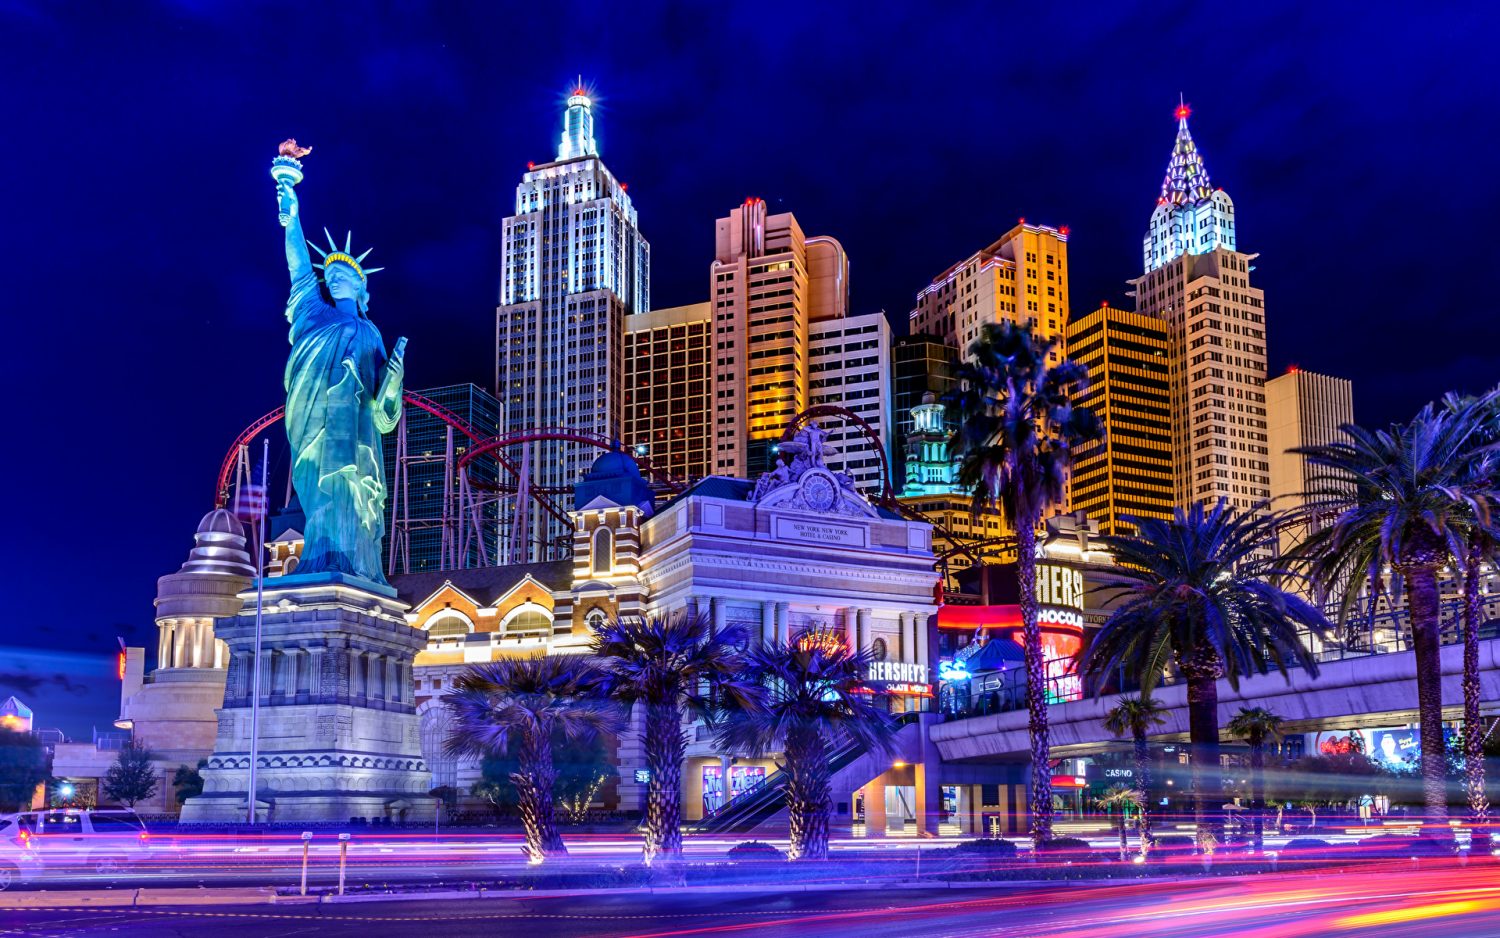 New York - New York Hotel & Casino Las Vegas - Welcome to the